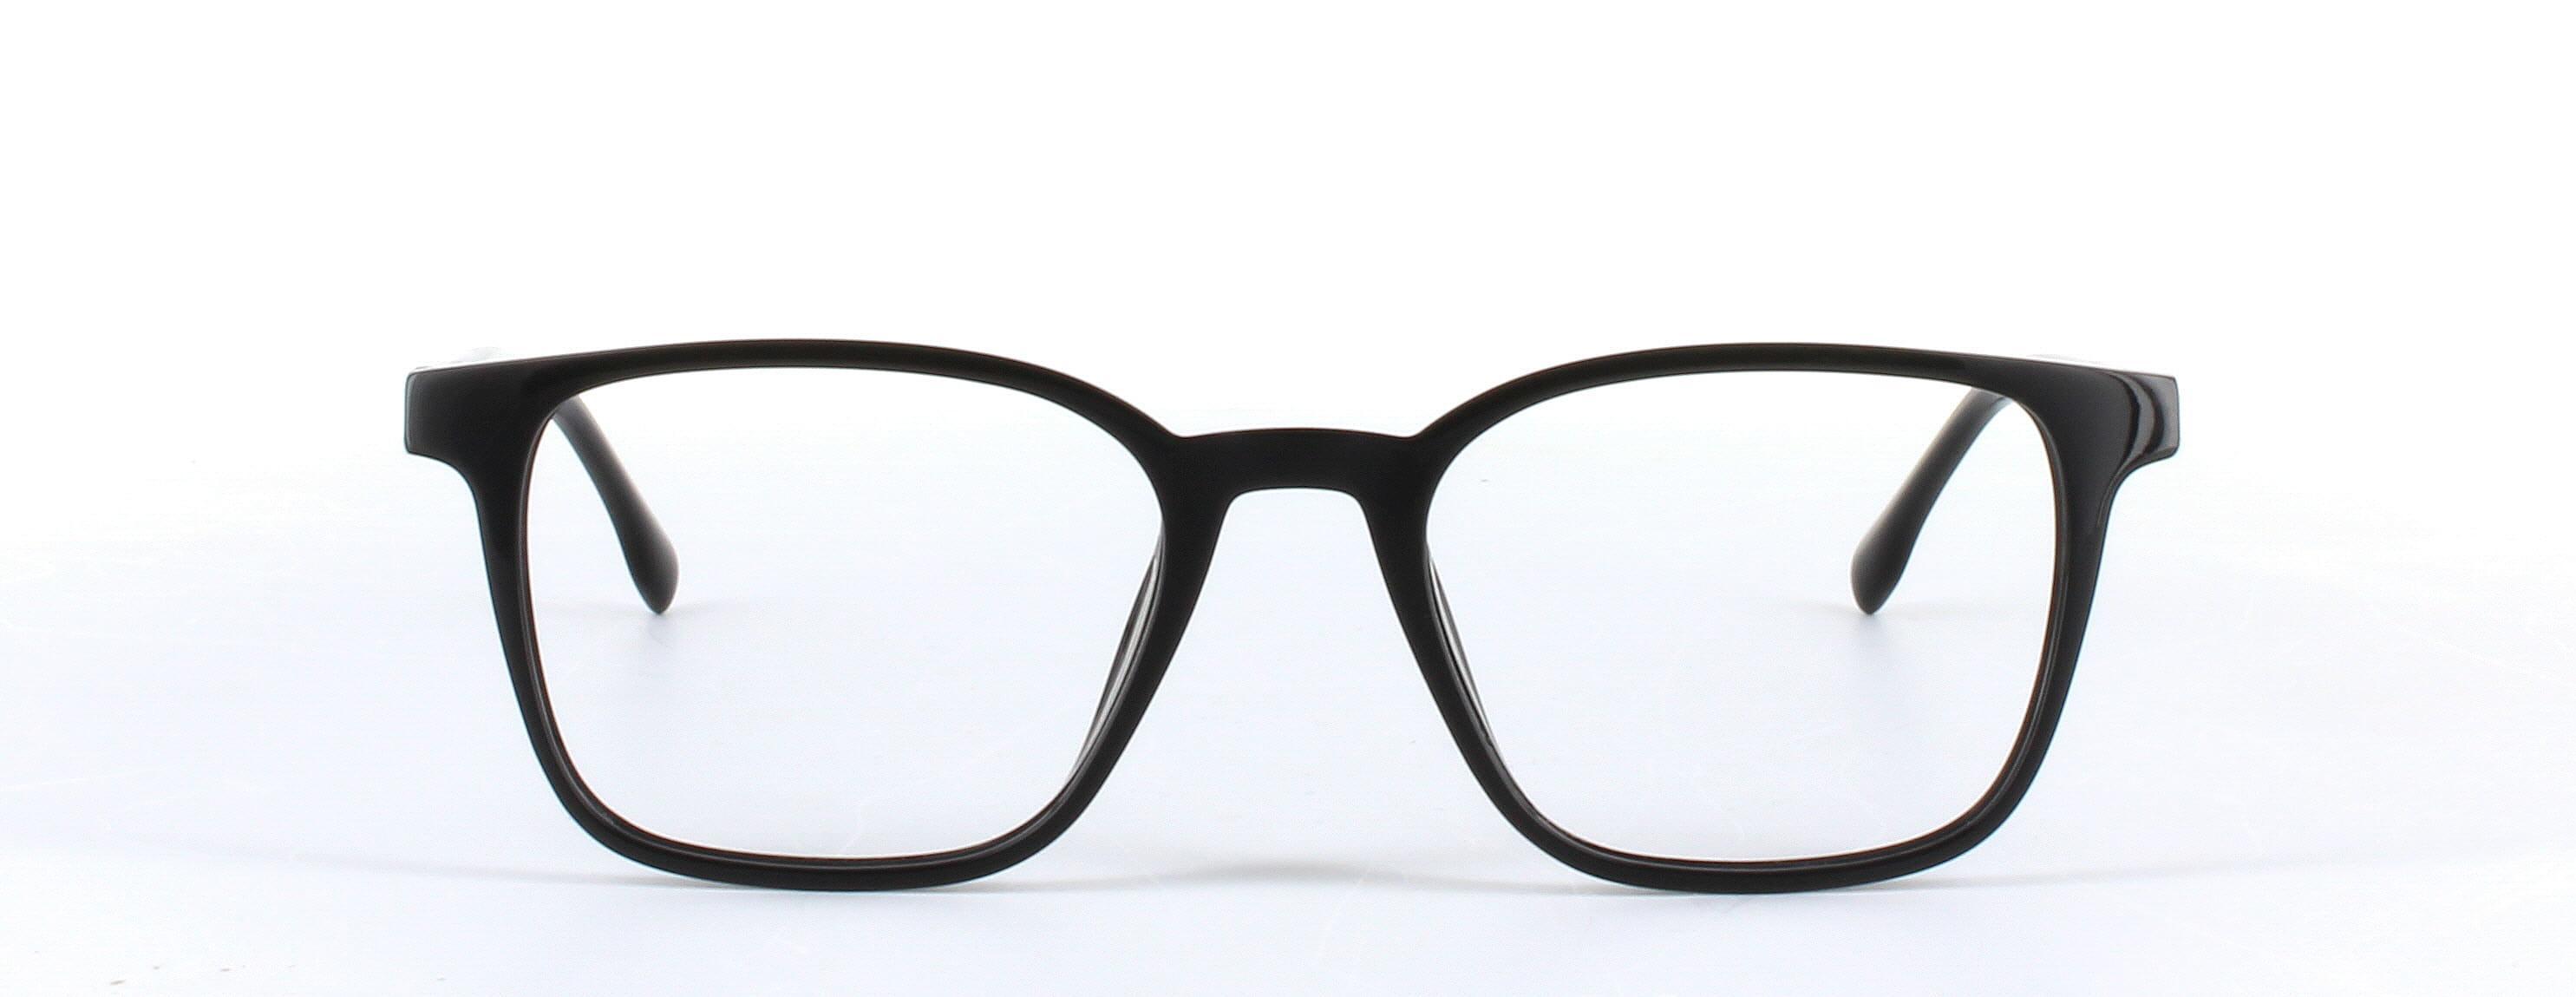 Hodson Black Full Rim Acetate Glasses - Image View 5